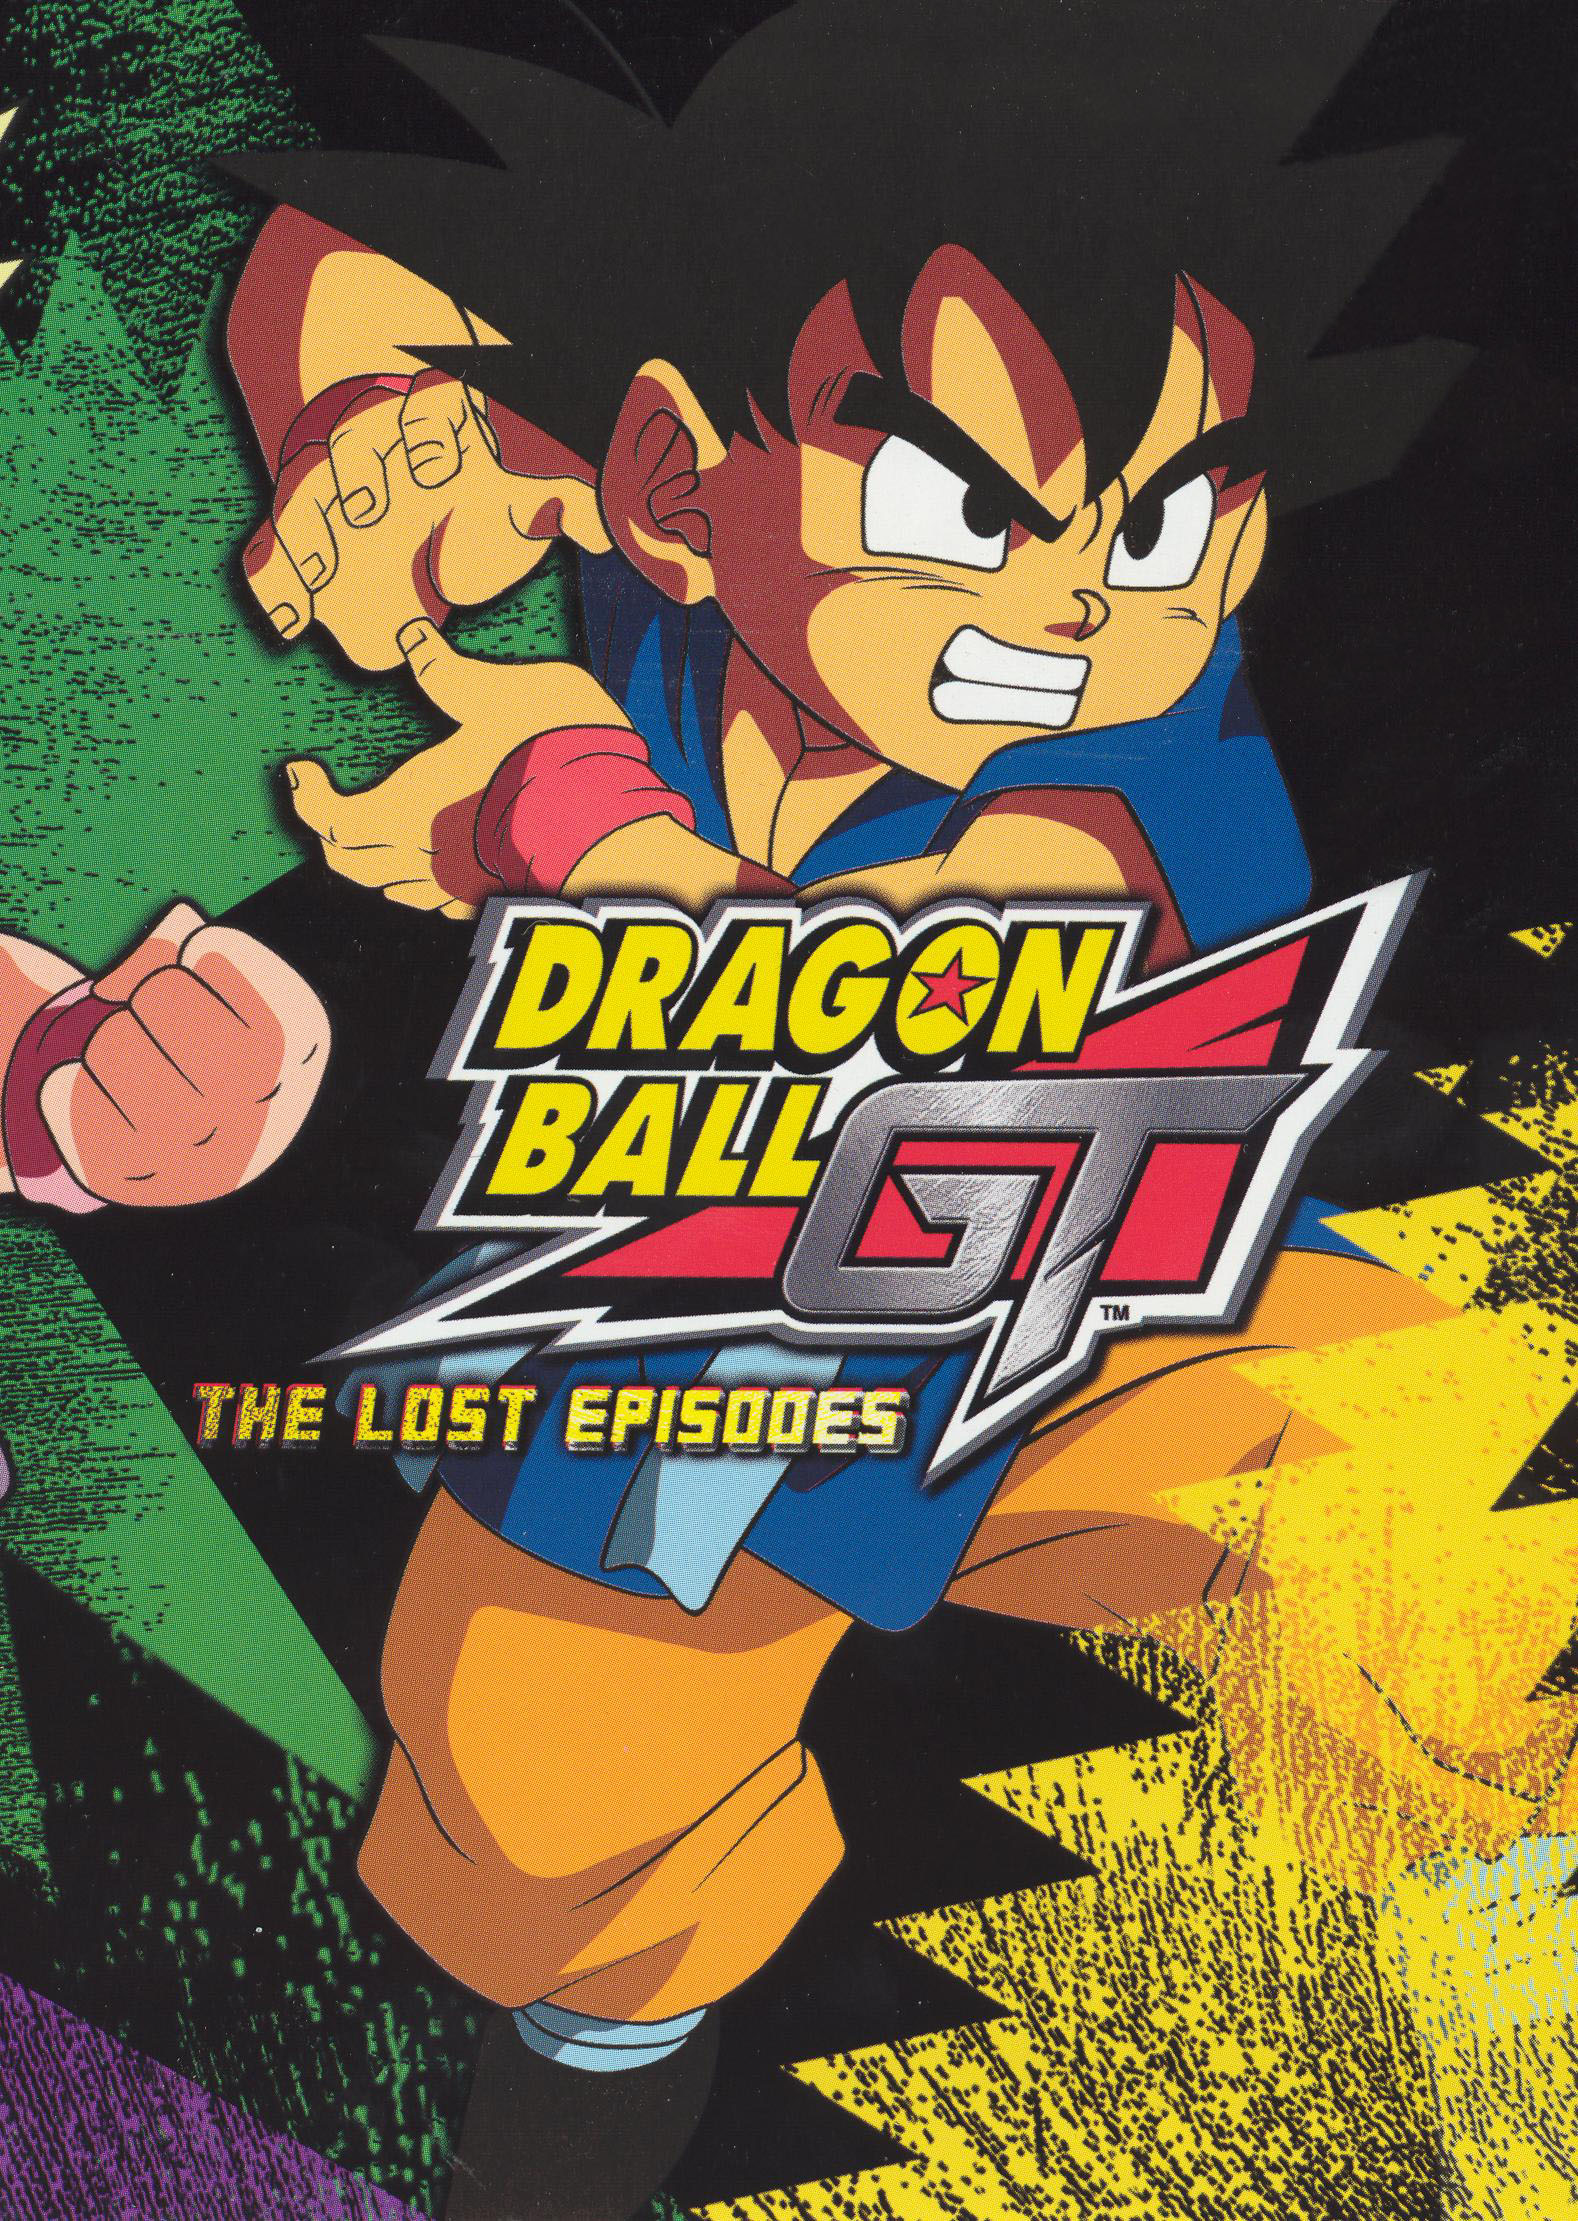 Dragon Ball GT Episode Guide